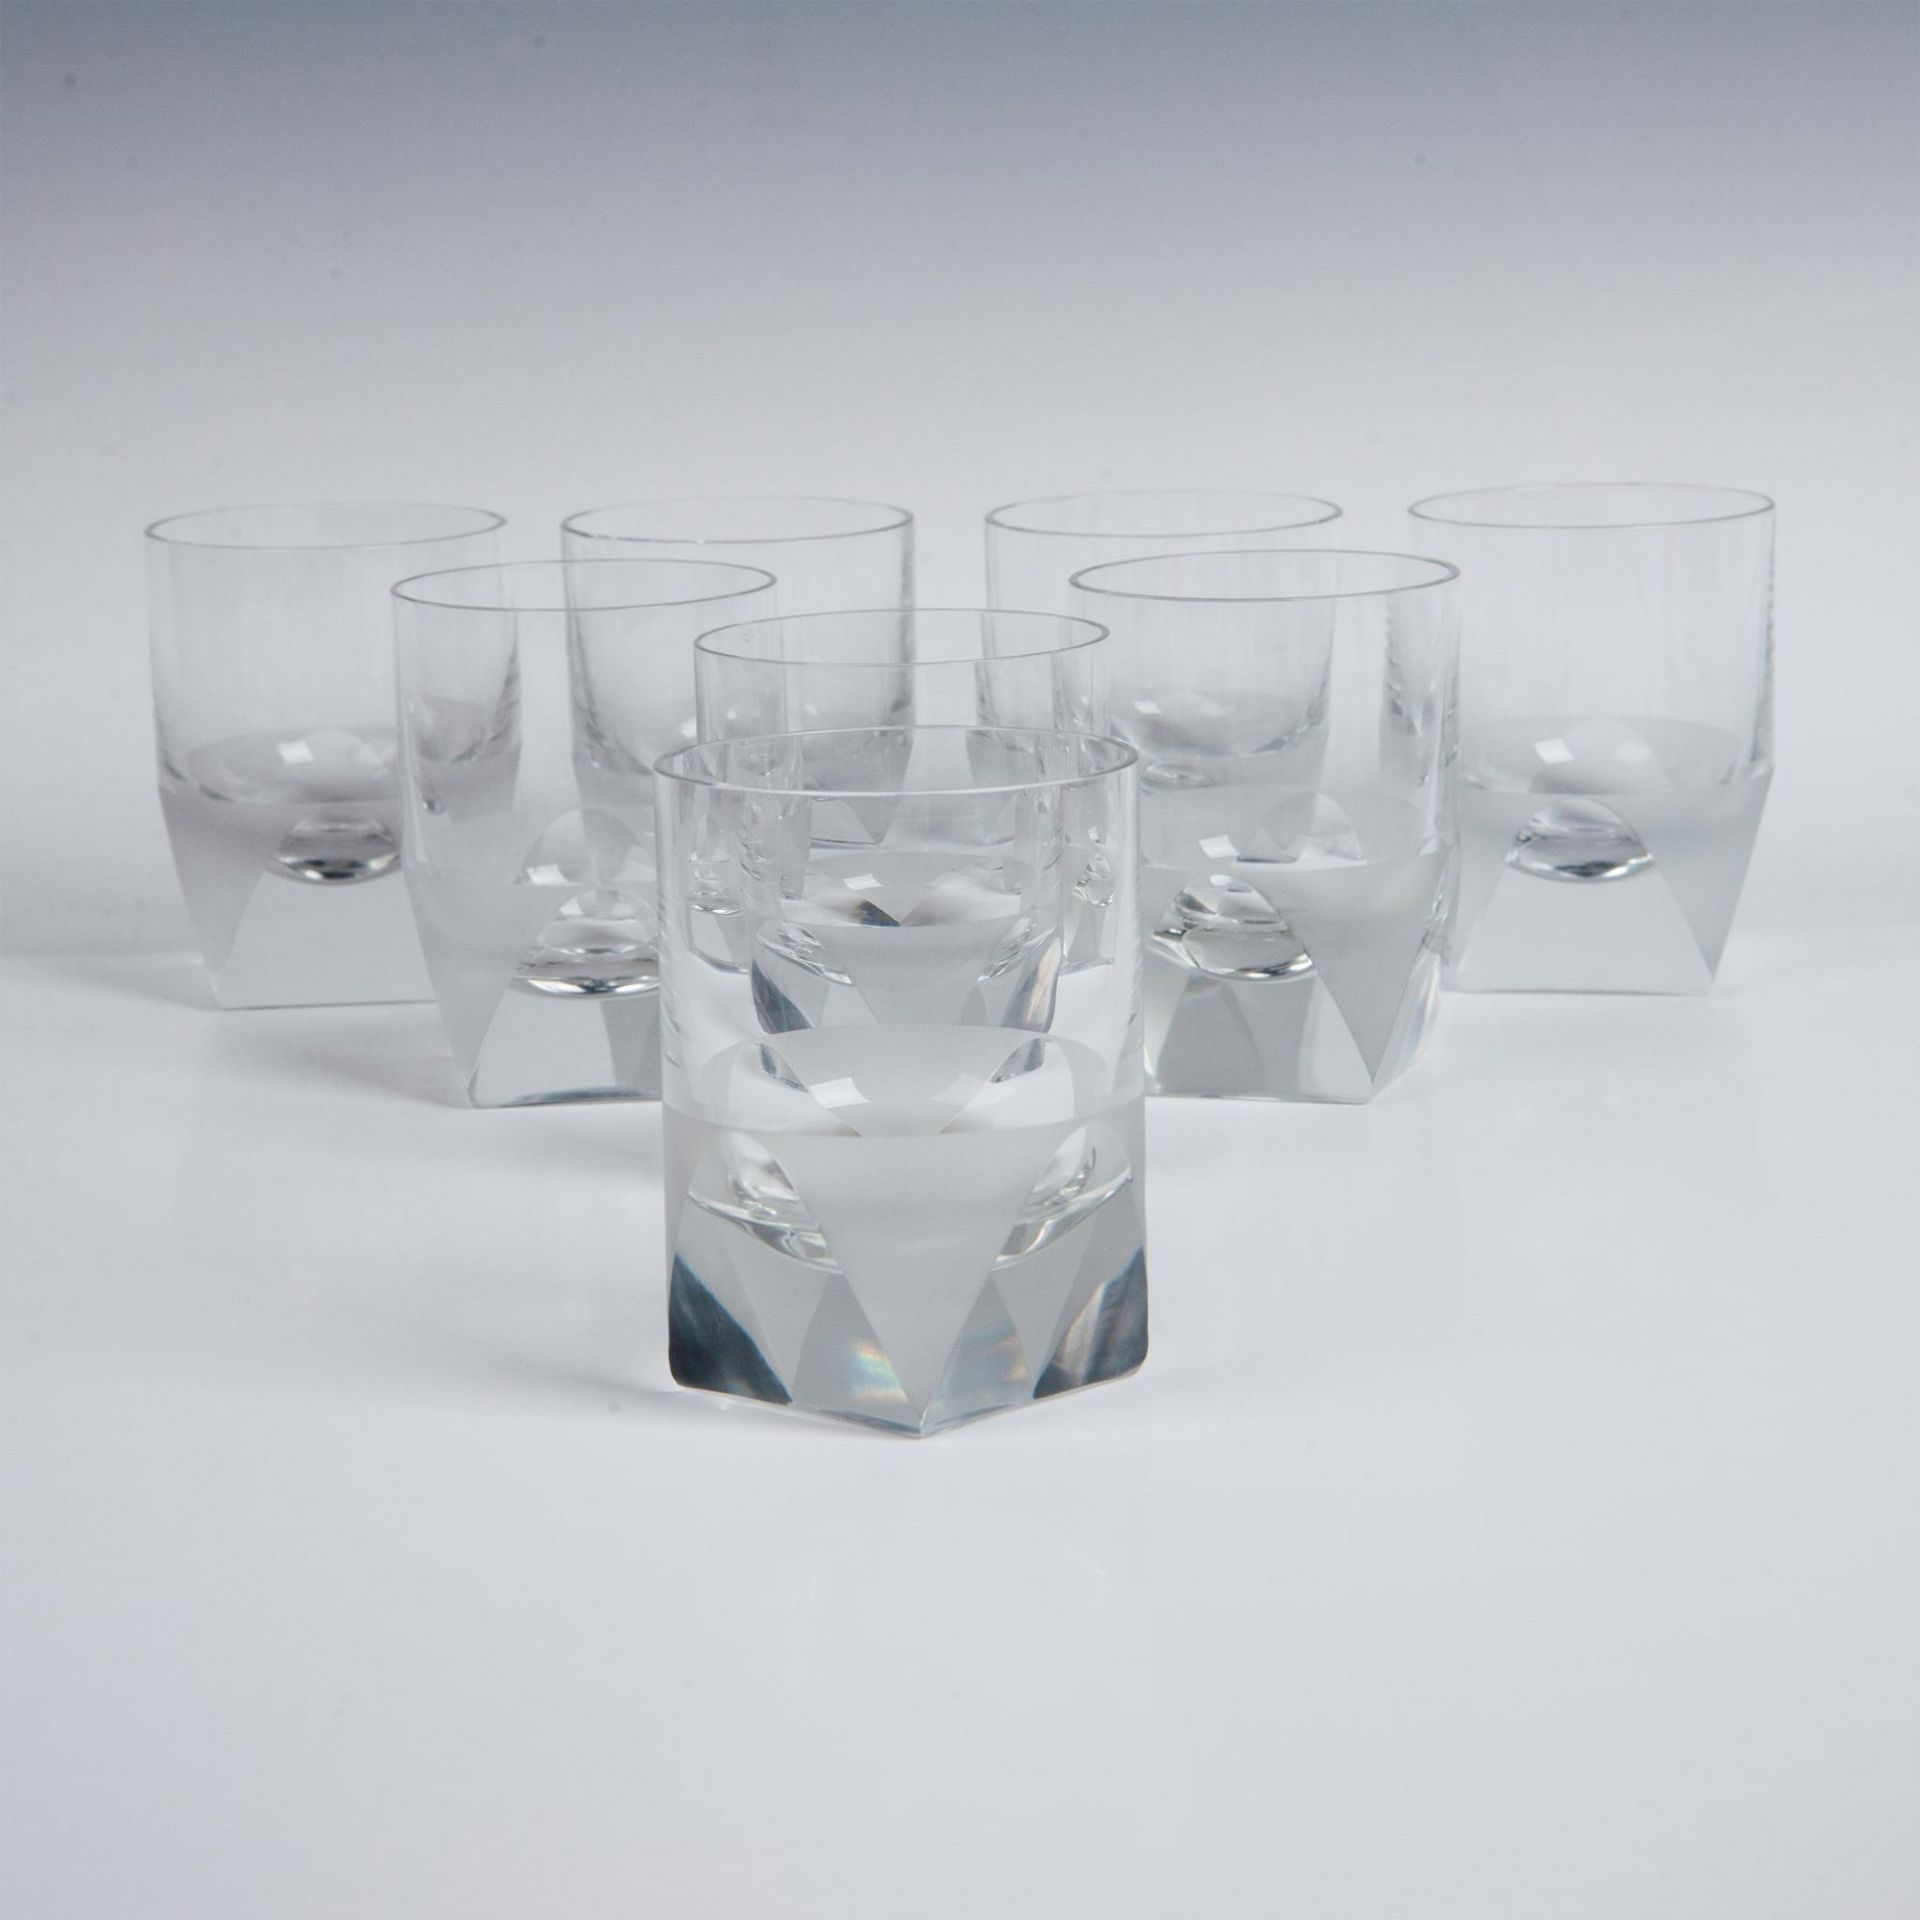 8pc Rosenthal Studio-Line Rocks Glasses, Skal Pattern - Image 2 of 9